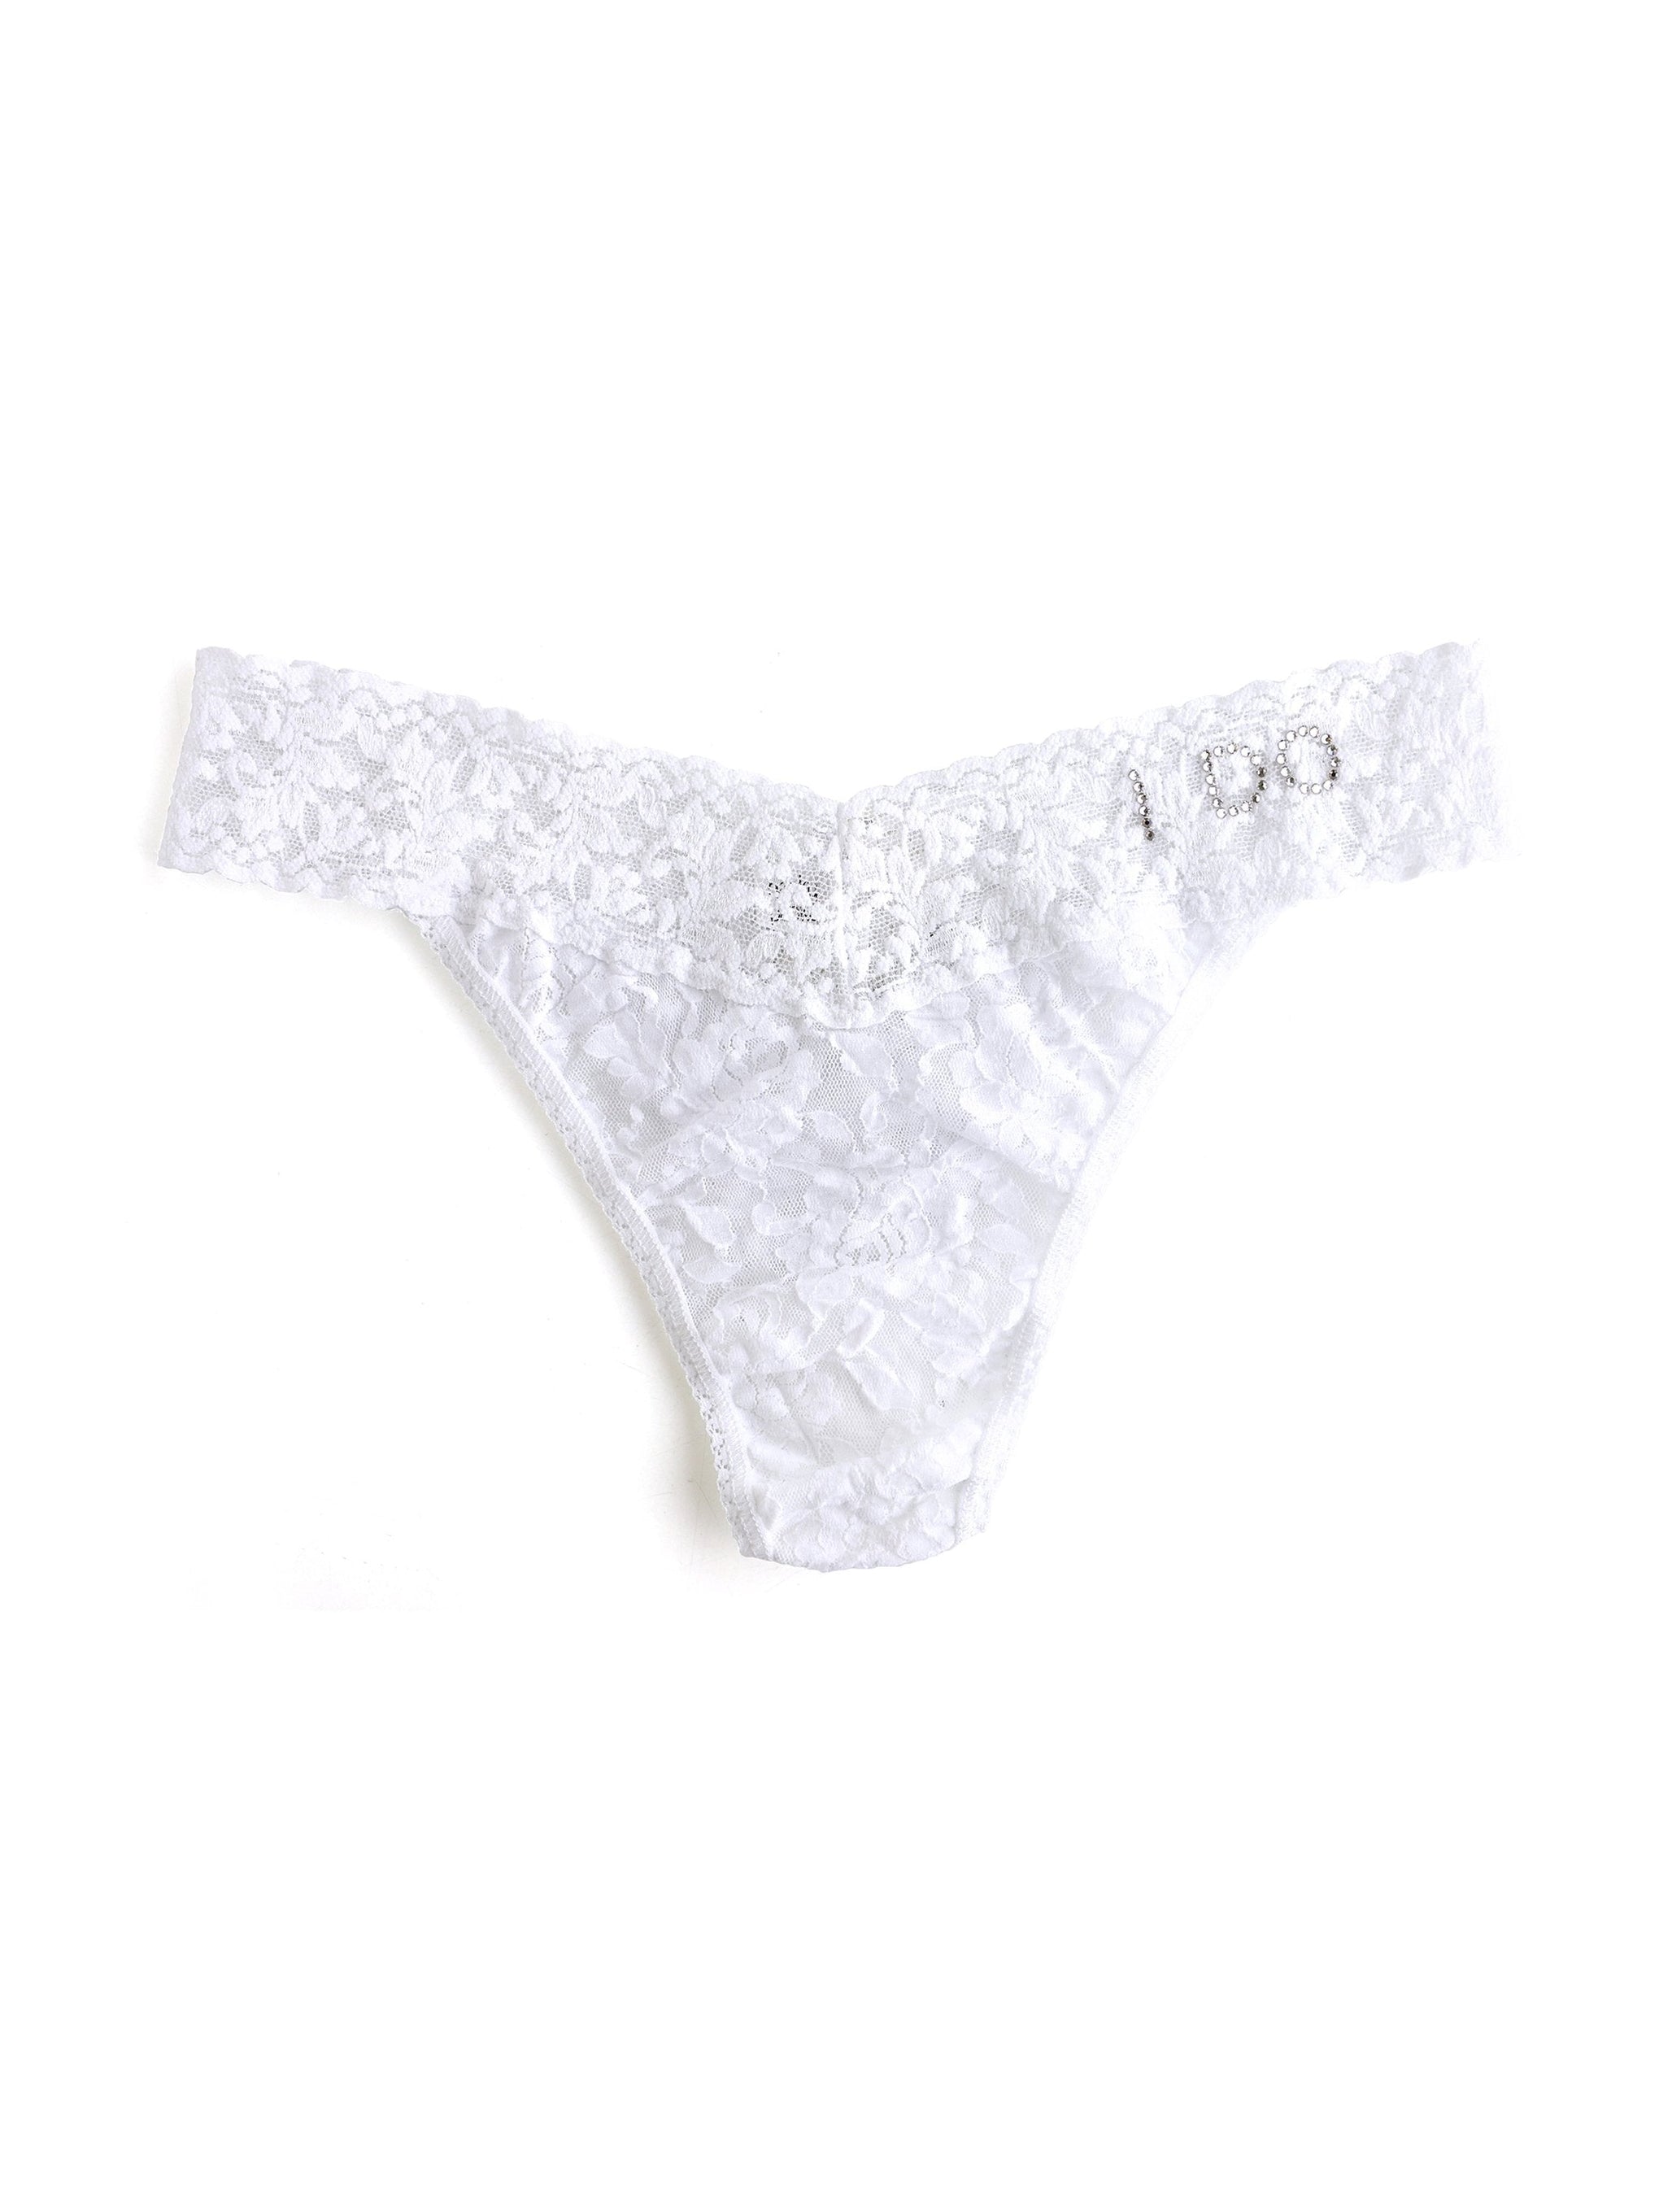 Lace Thongs Panties, Lace Underpants, Lace Underwear